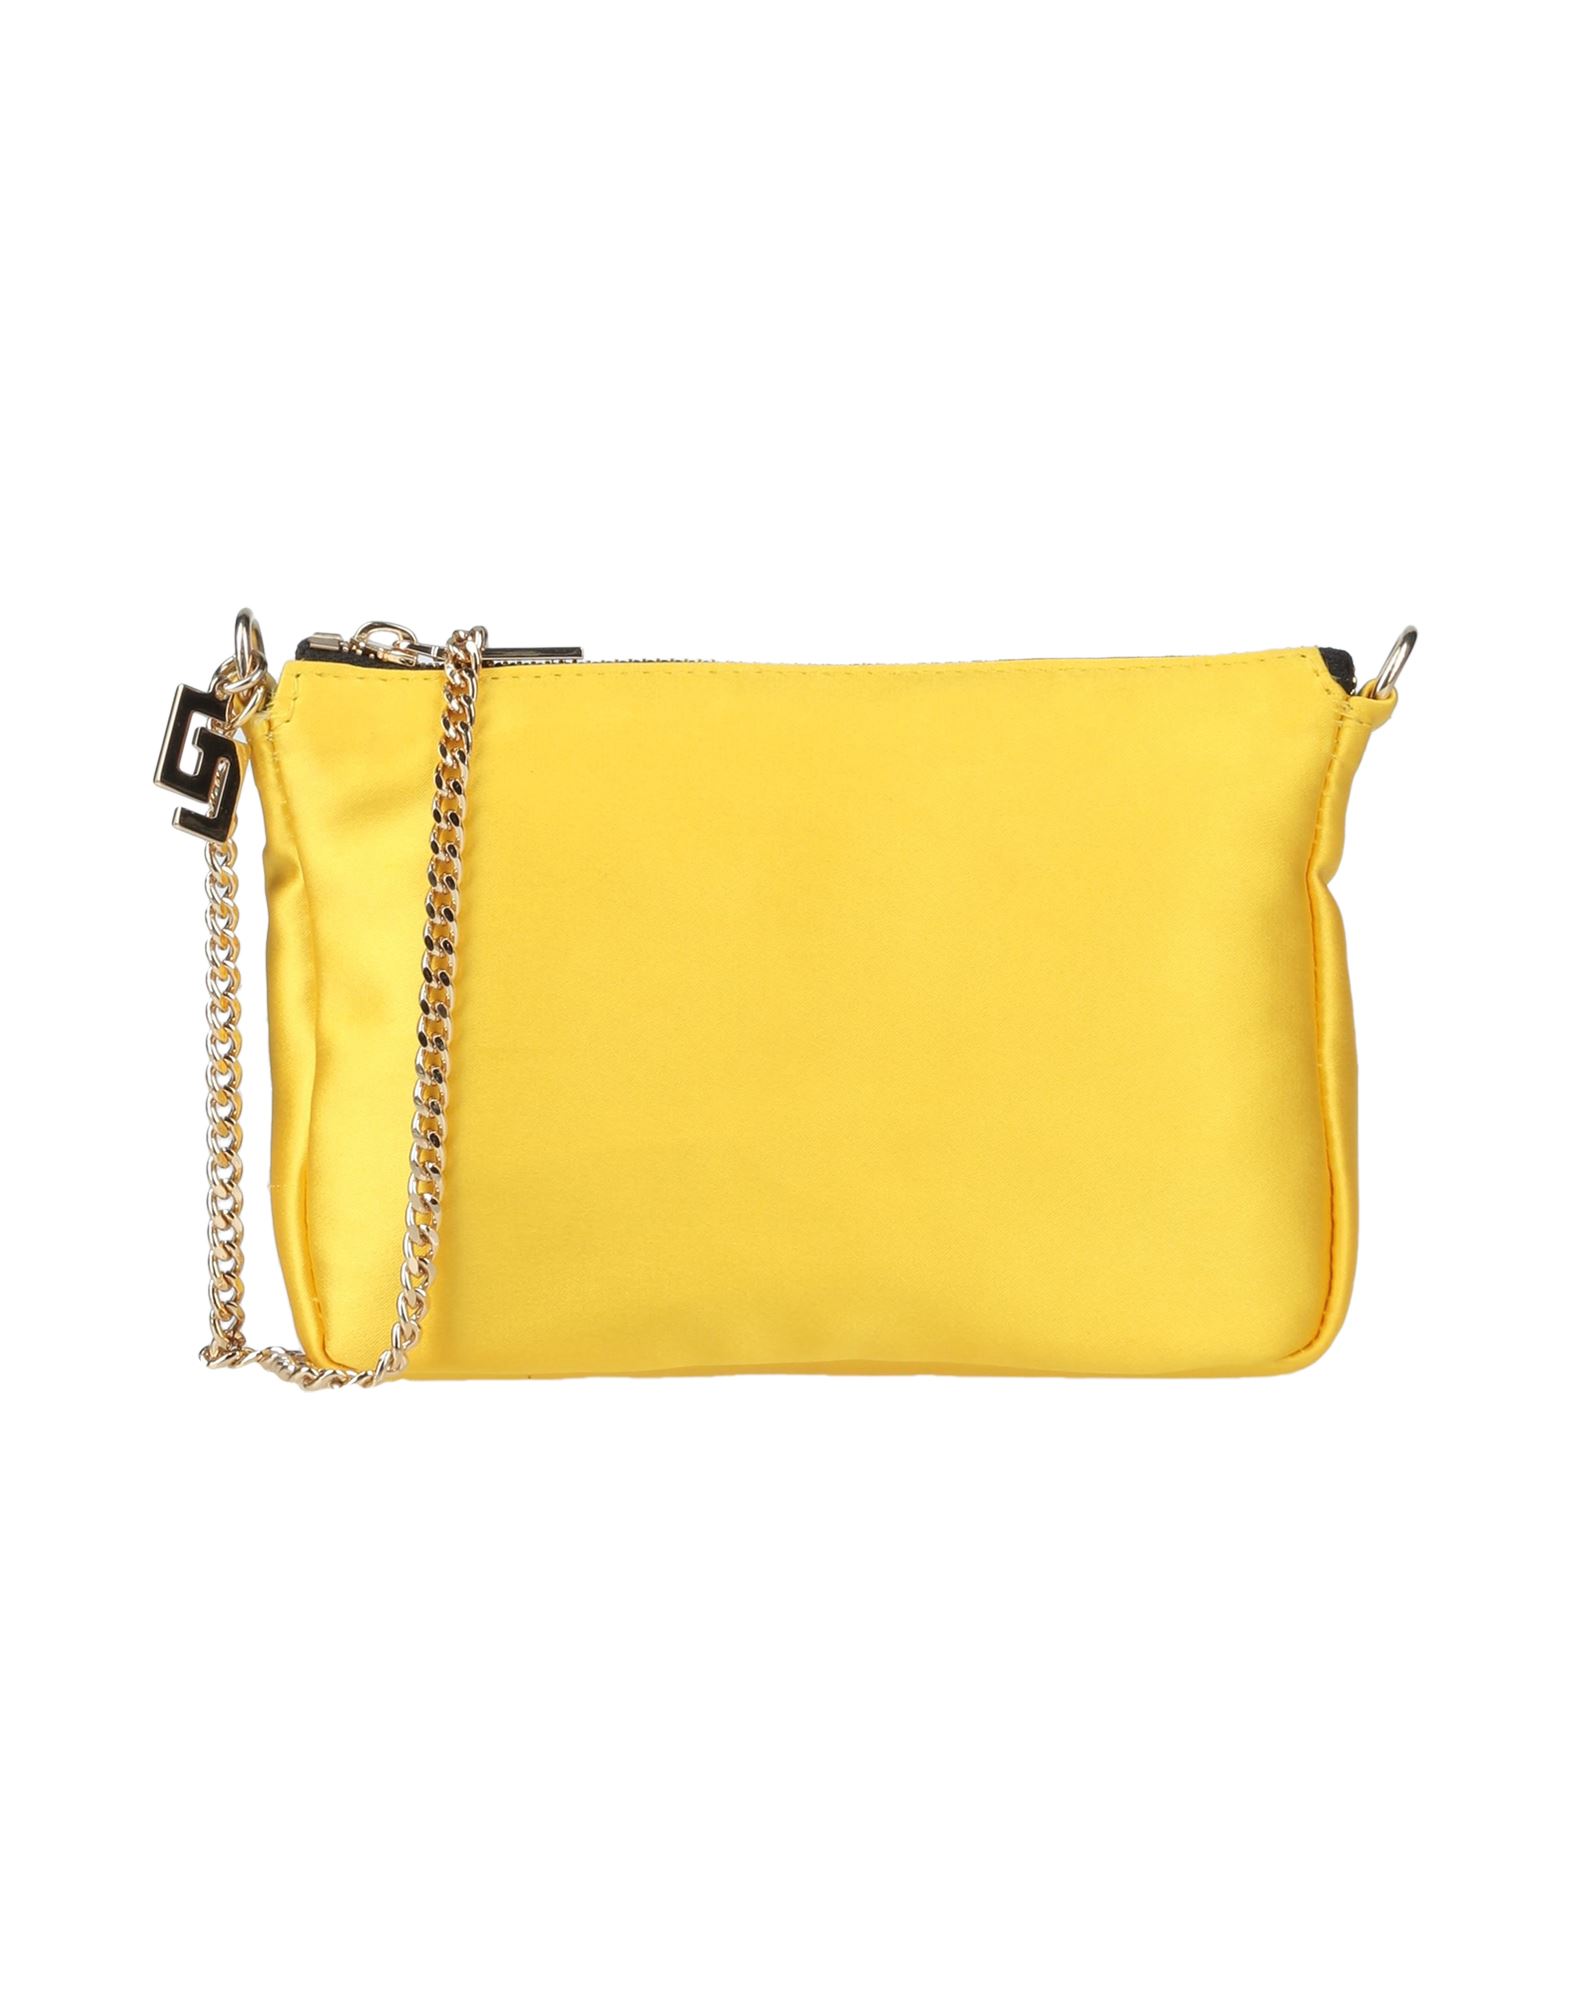 Carla G. Handbags In Yellow | ModeSens